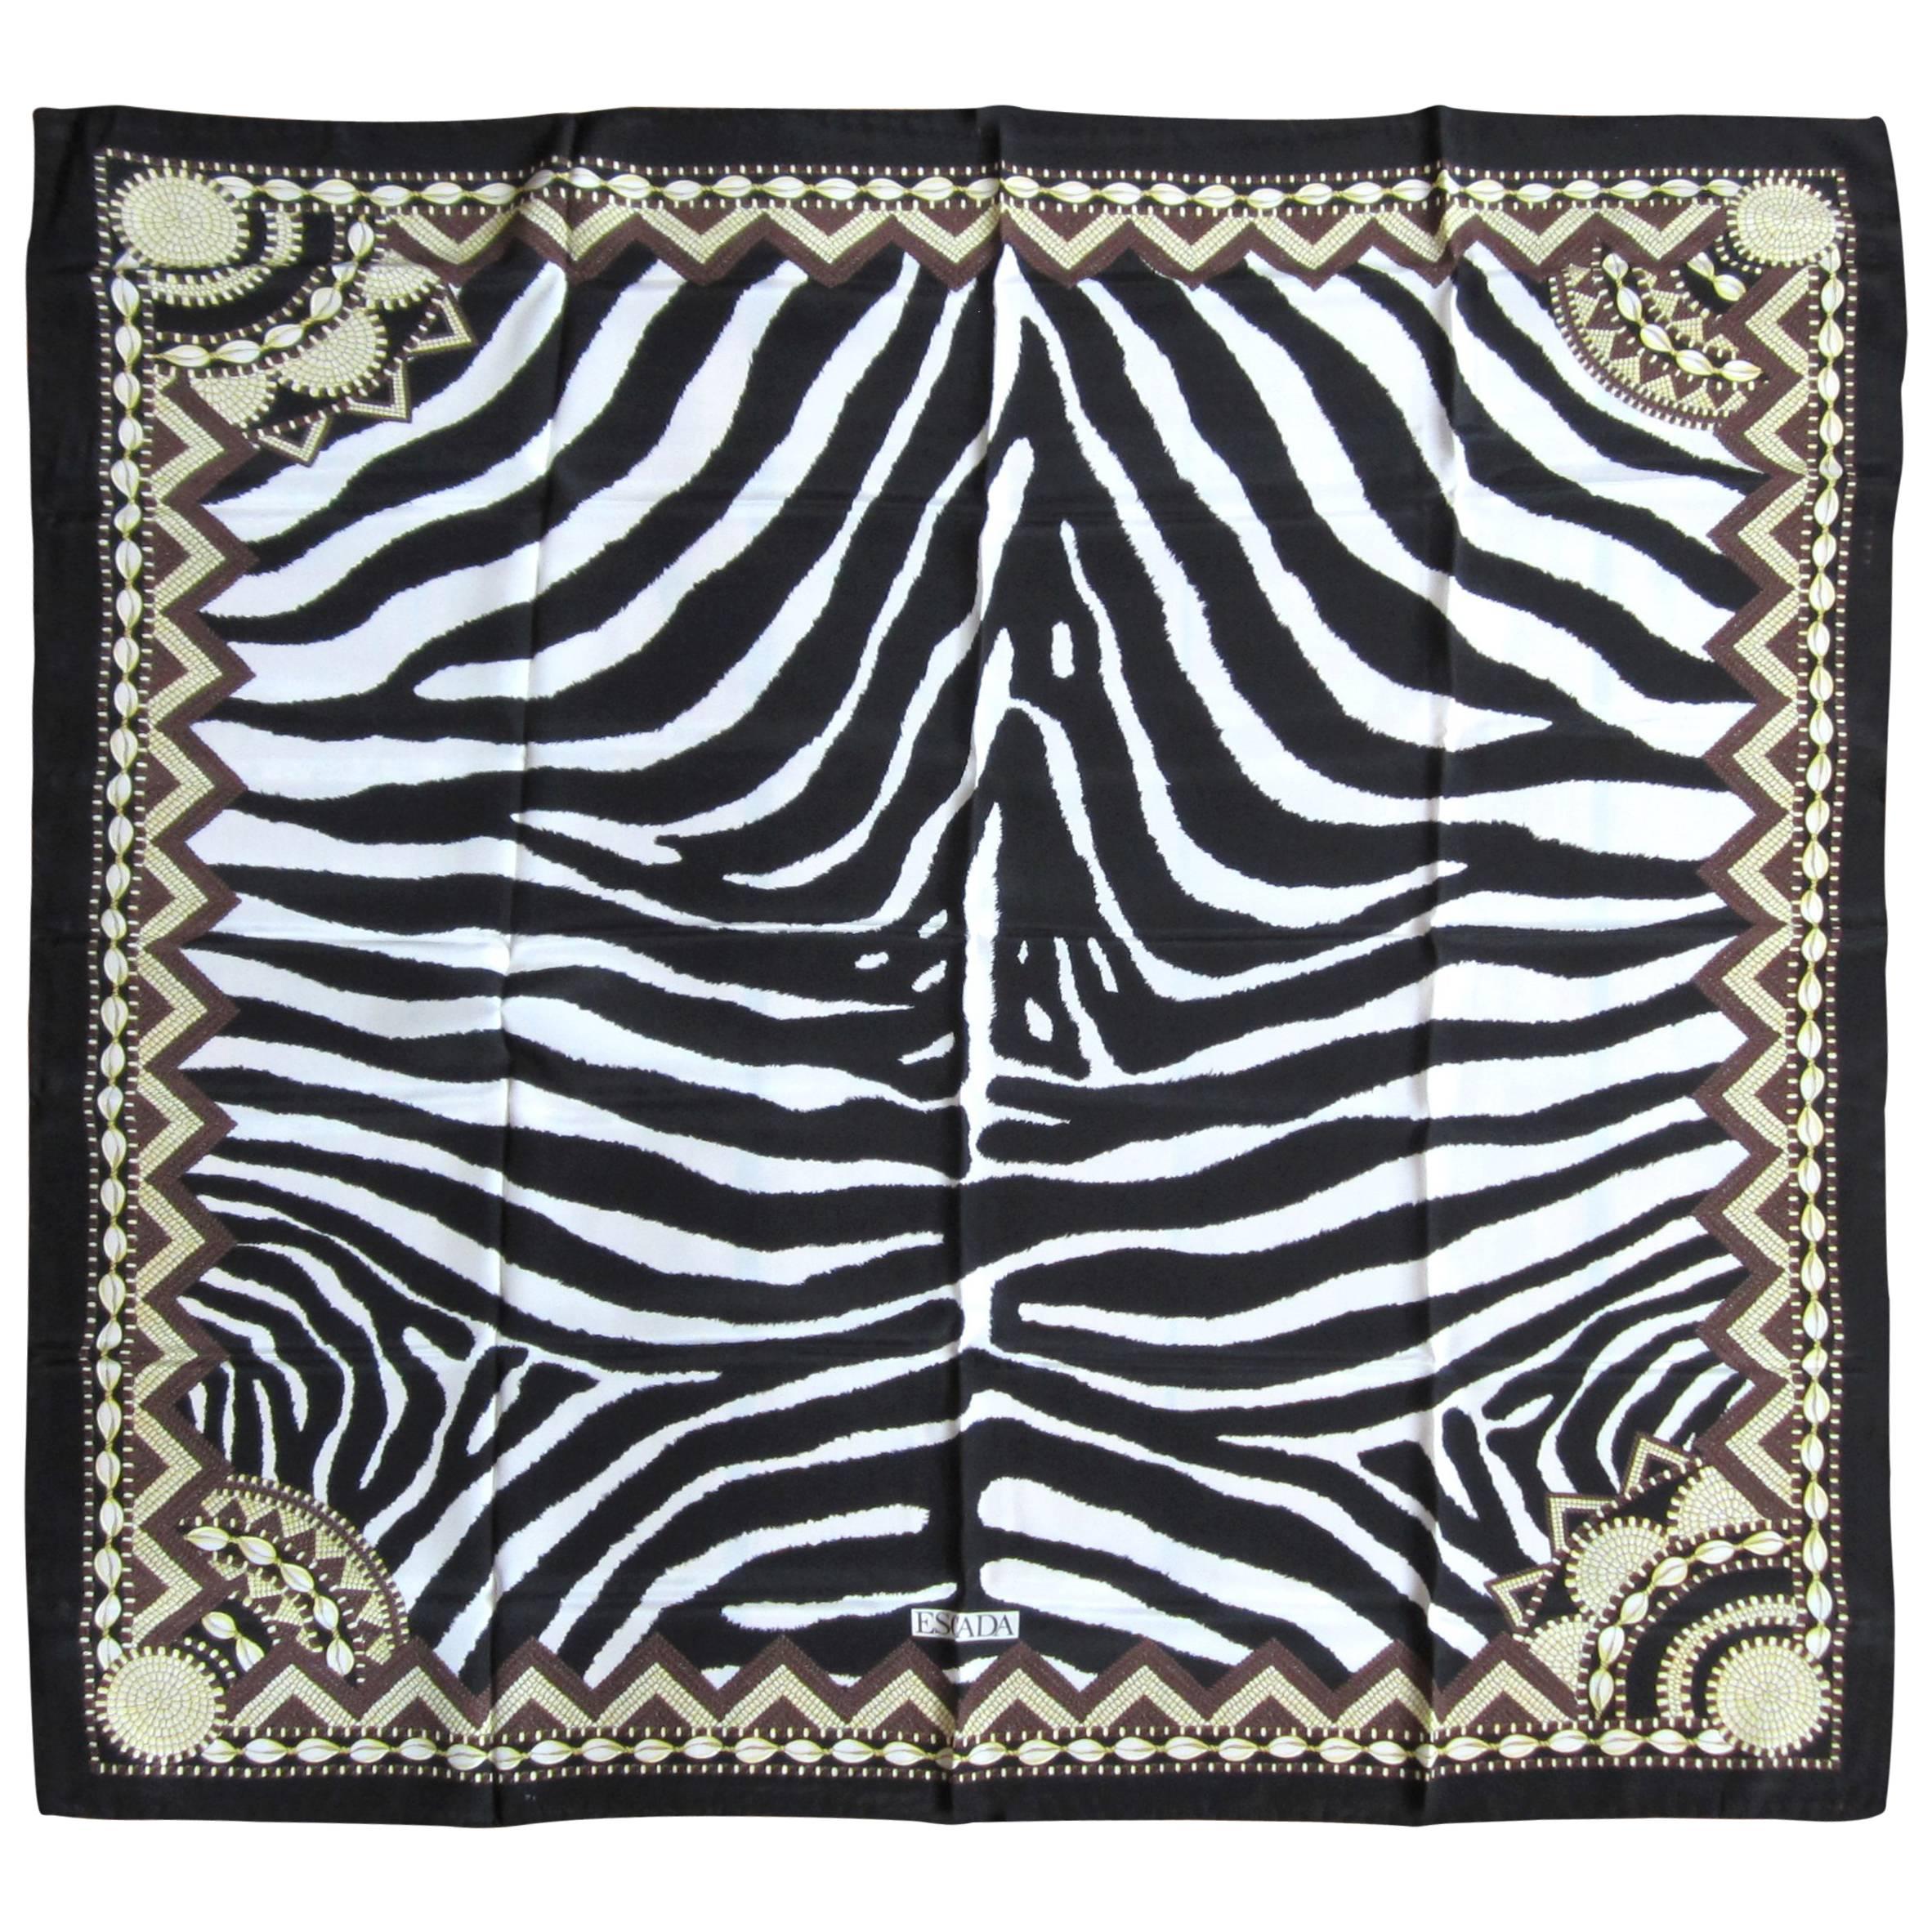 Escada Black & White Zebra Scarf Never worn 1990s Silk 